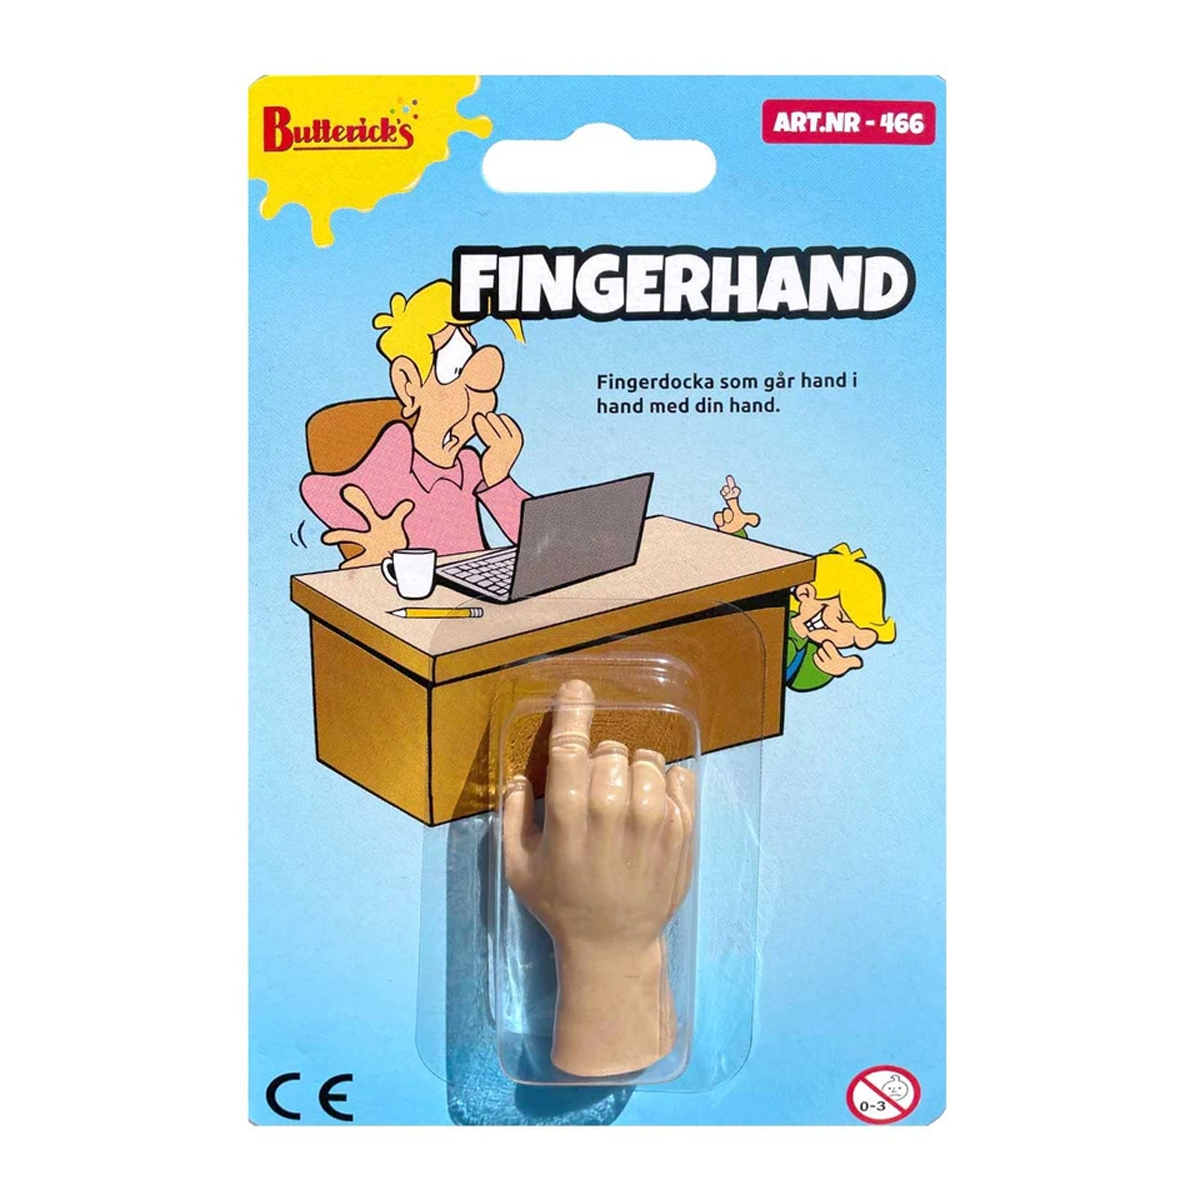 Fingerhand